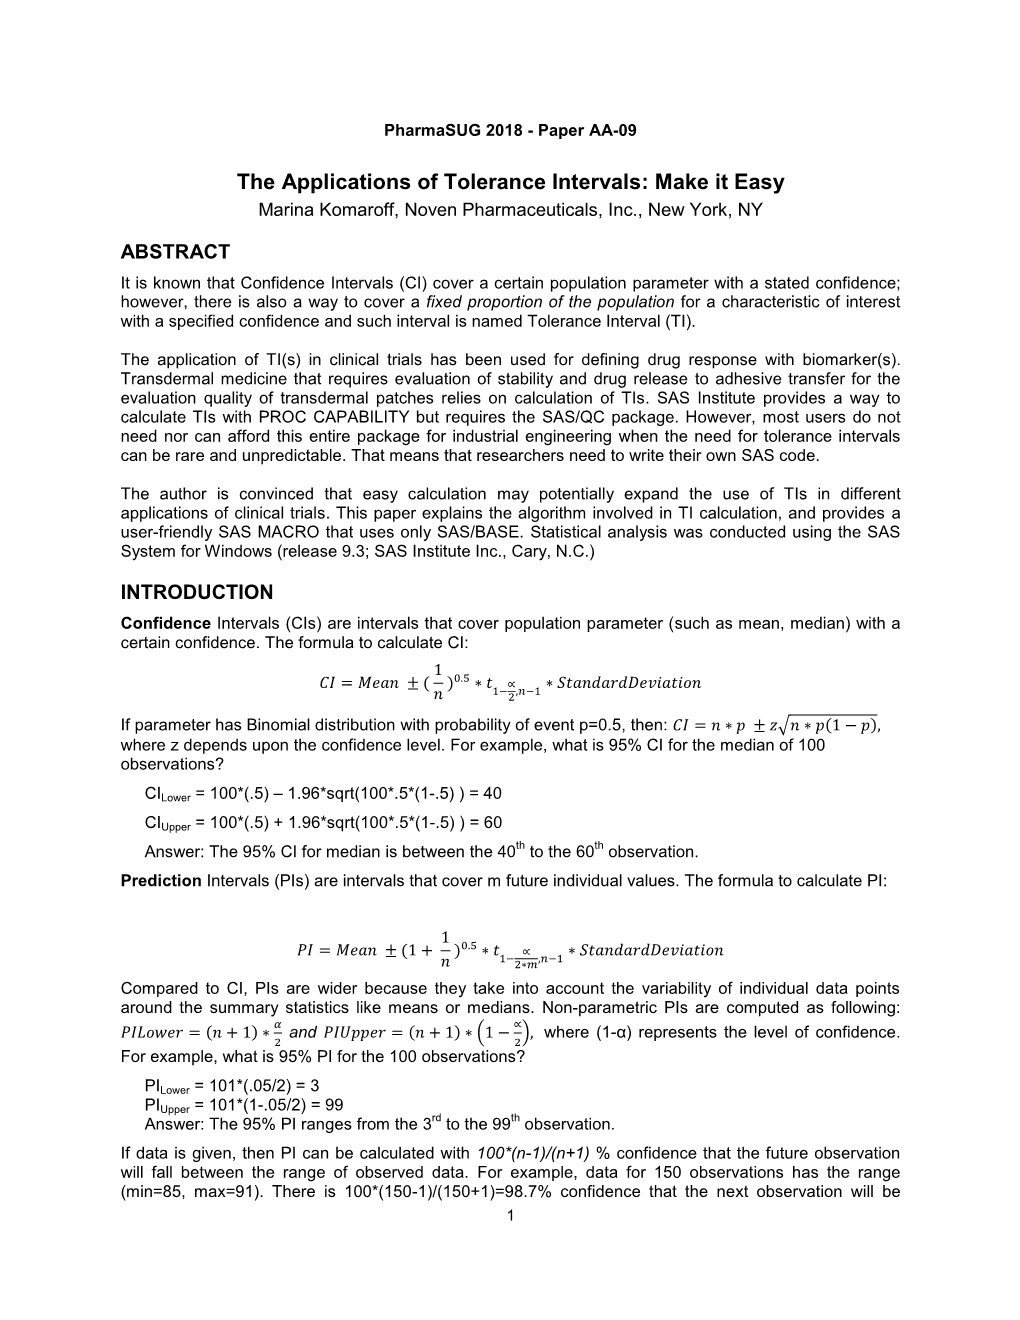 The Applications of Tolerance Intervals: Make It Easy Marina Komaroff, Noven Pharmaceuticals, Inc., New York, NY